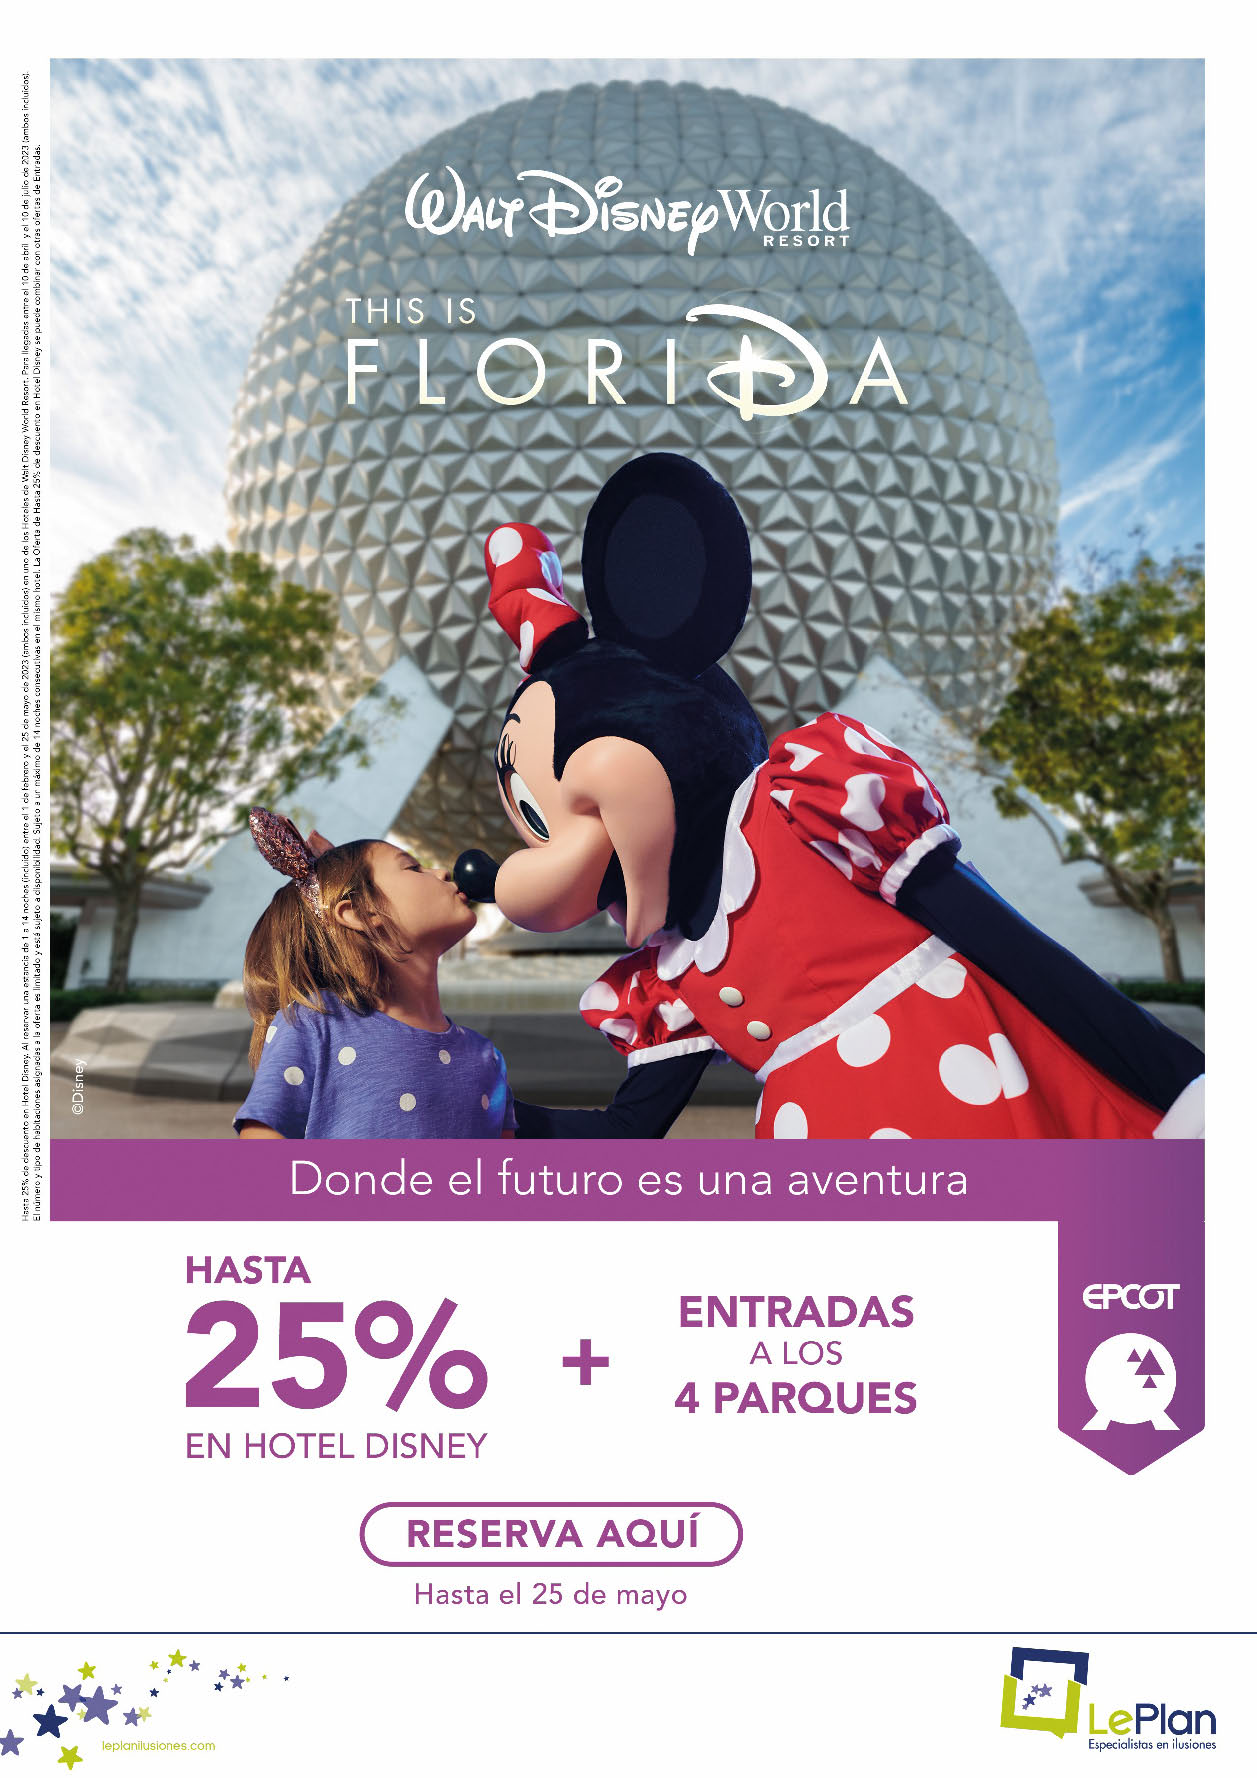 Oferta LePlan Ilusiones Walt Disney World Resort Florida Hotel Disney + Entradas 4 Parques 2023-2024